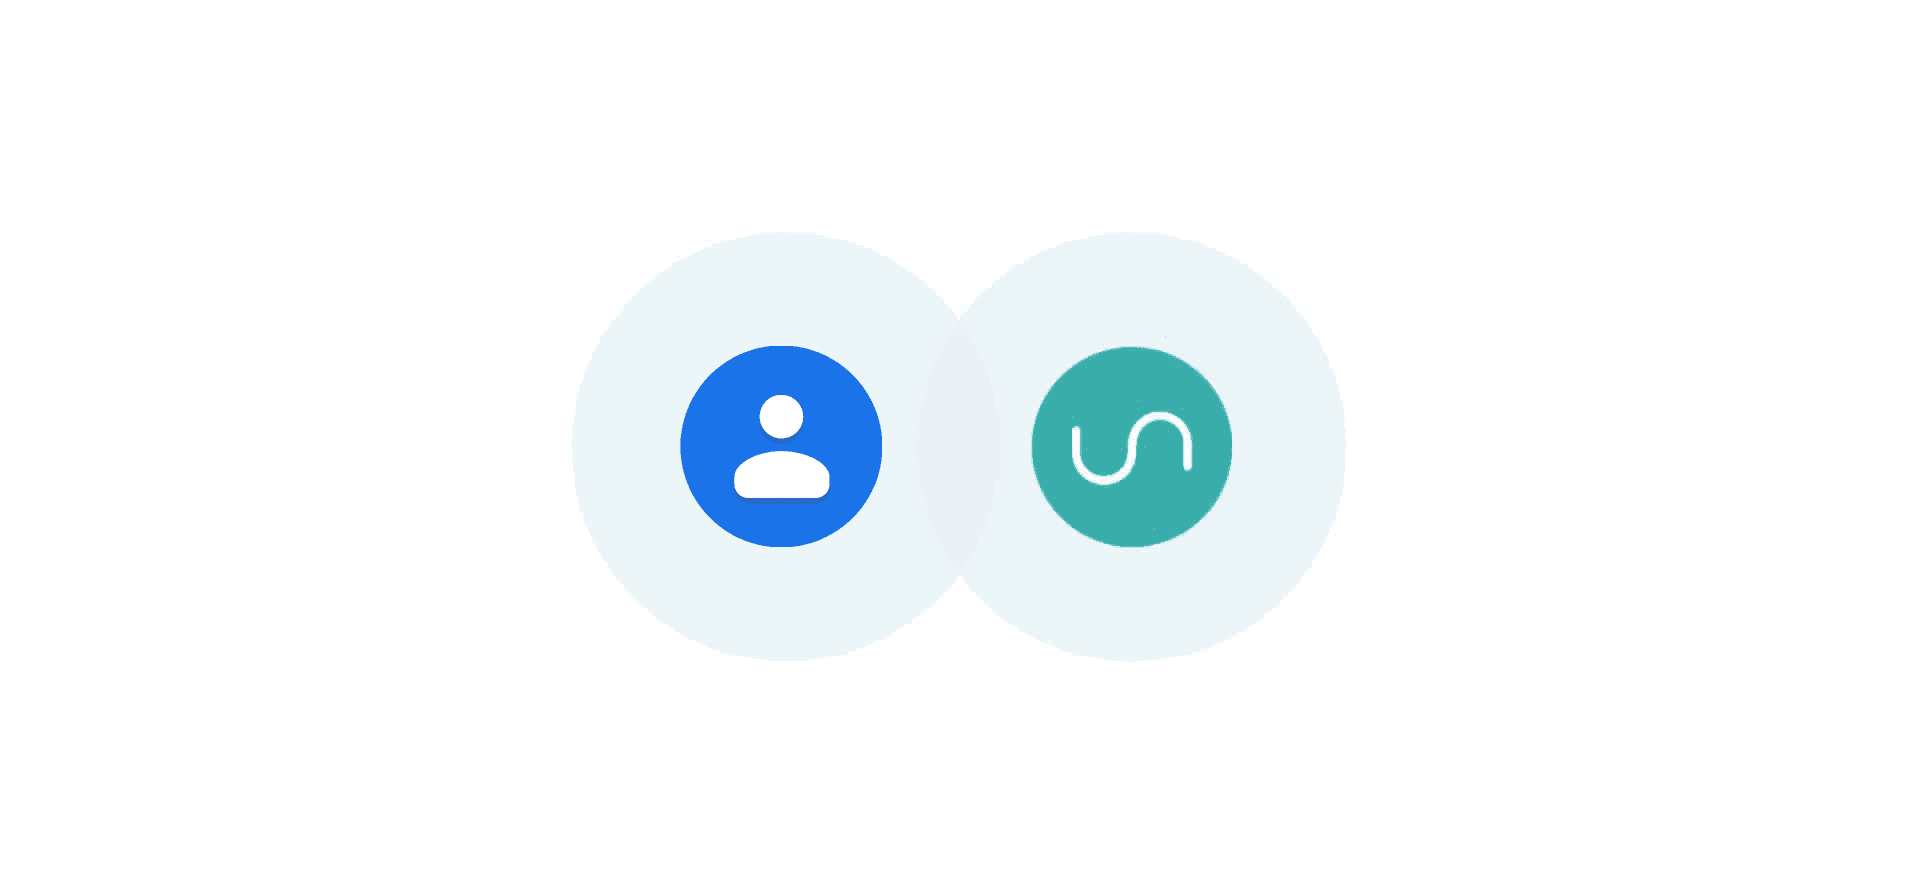 Logos for google contacts and unito, representing Unito's Google Contacts integration